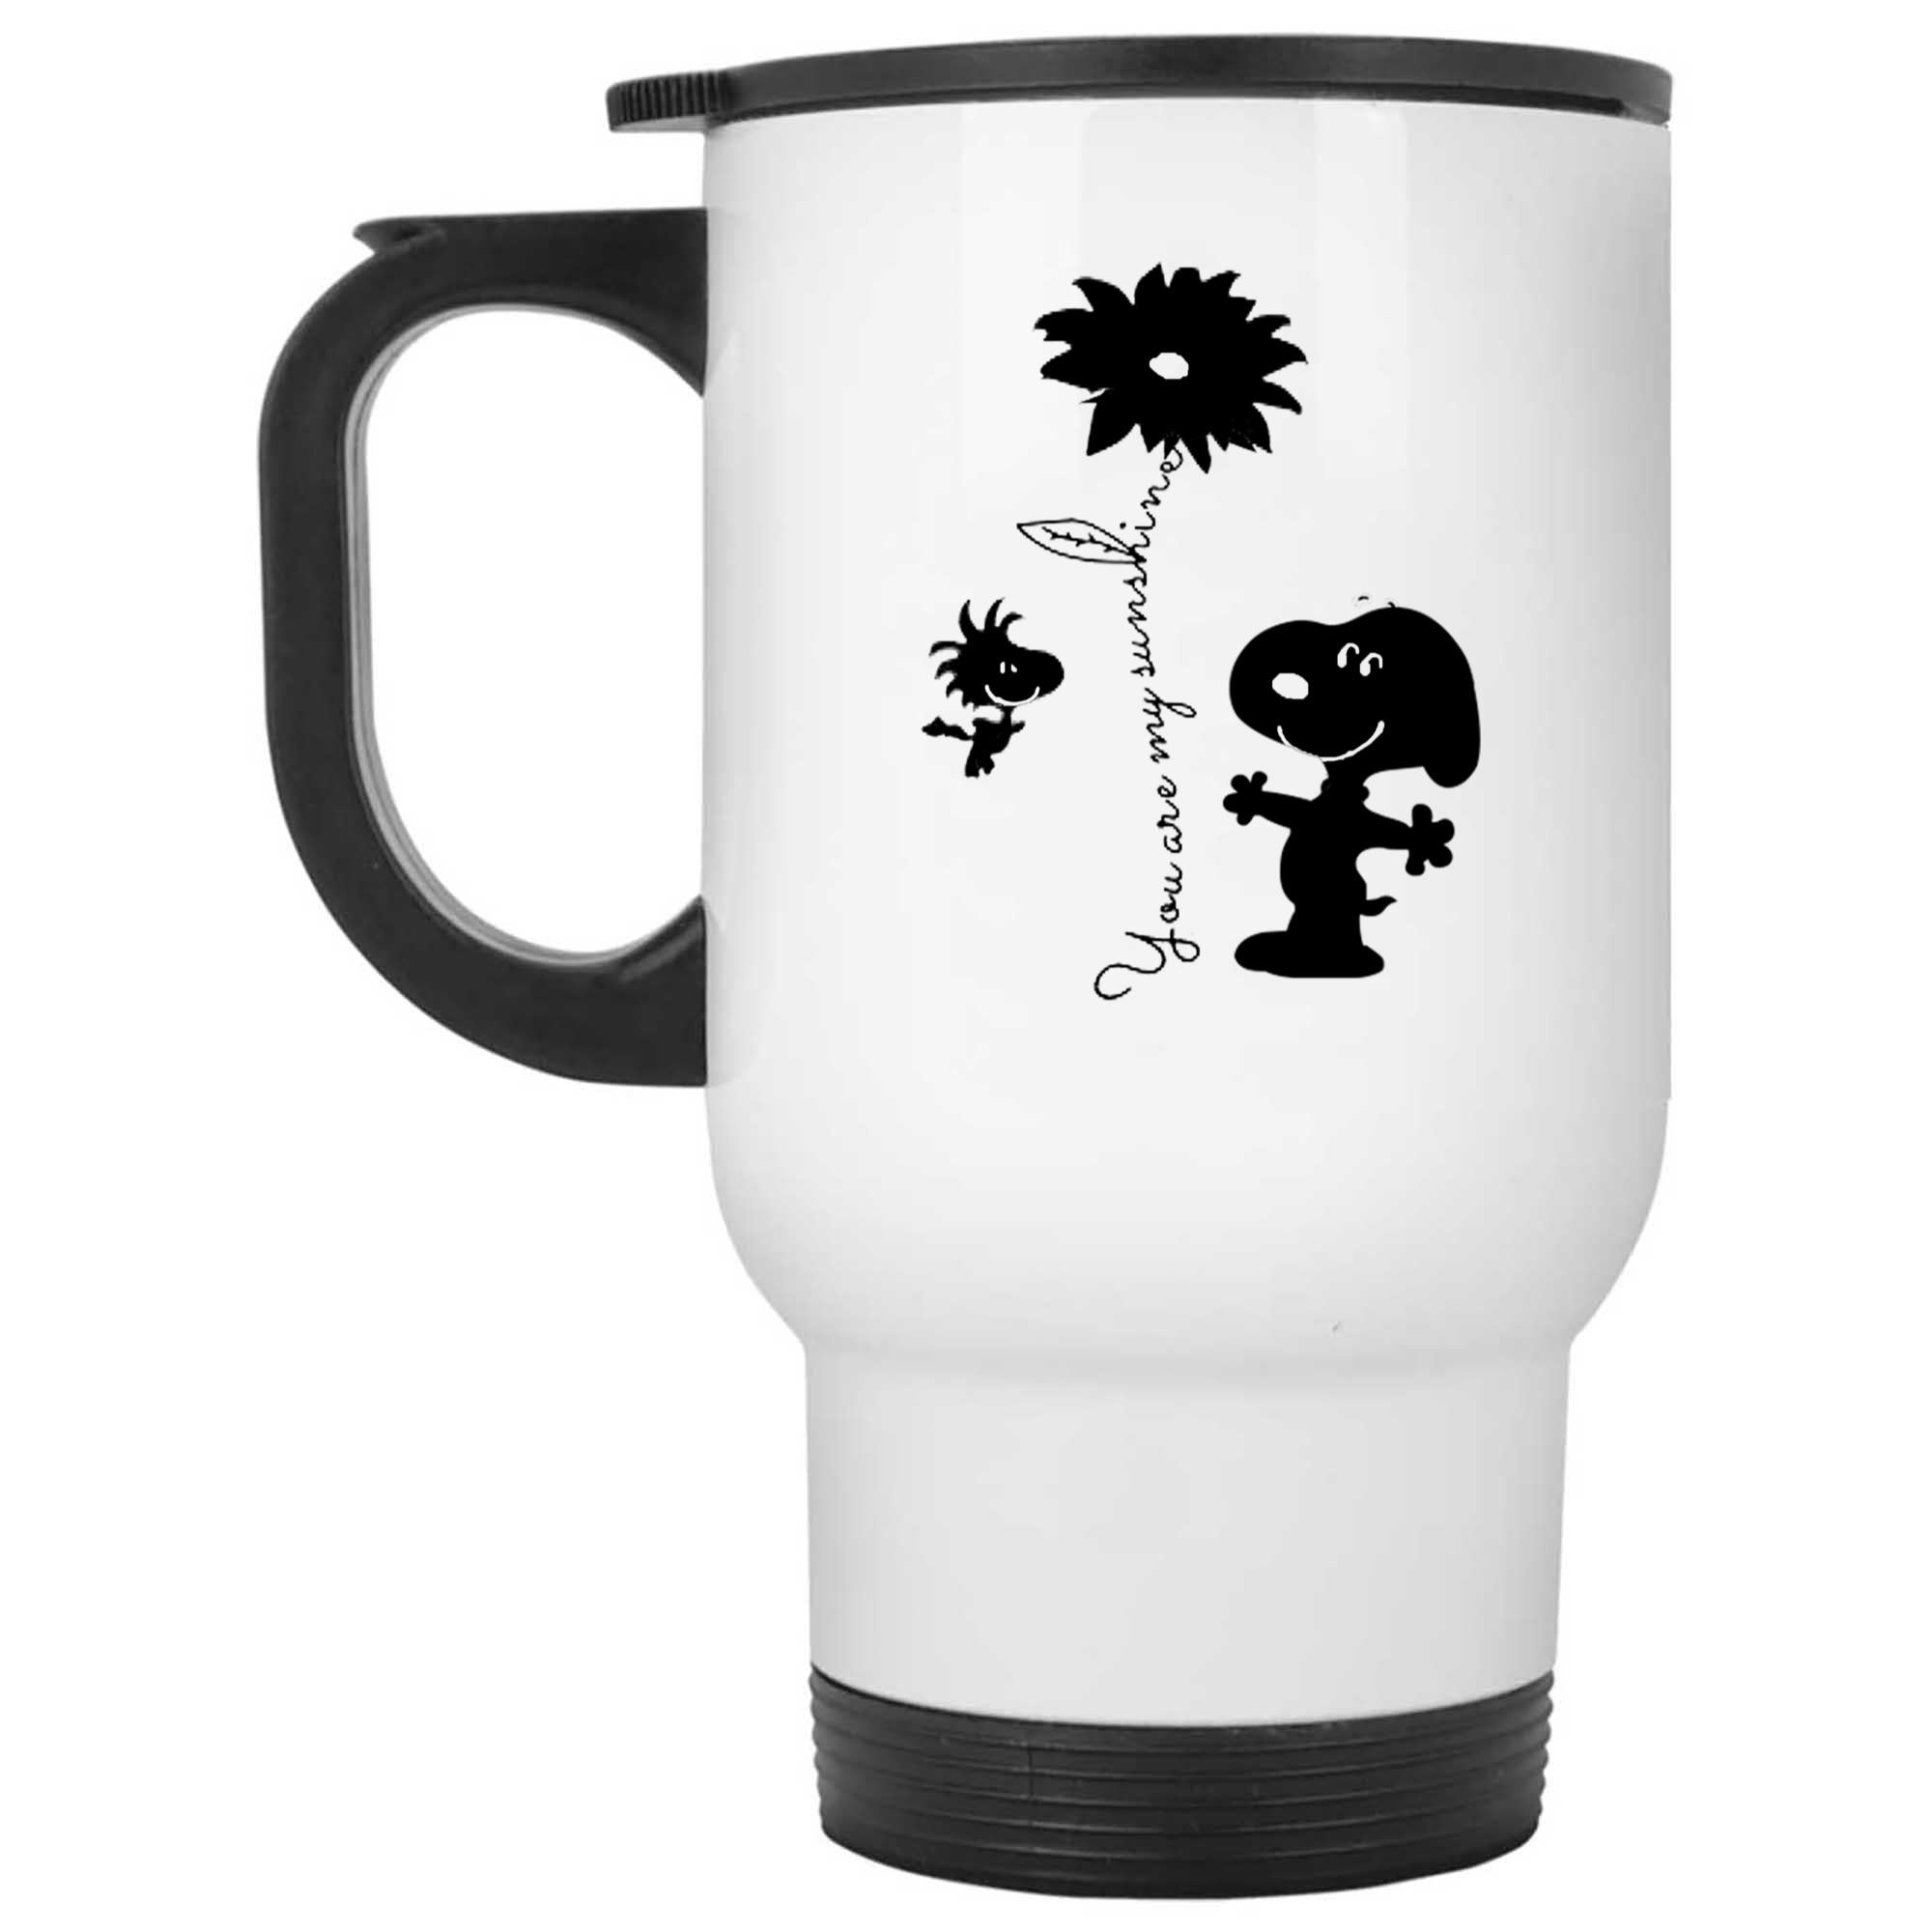 Skitongifts Funny Ceramic Novelty Coffee Mug You Are My Sunshine Sunflower For Teacher Ceramic Kqojnxs